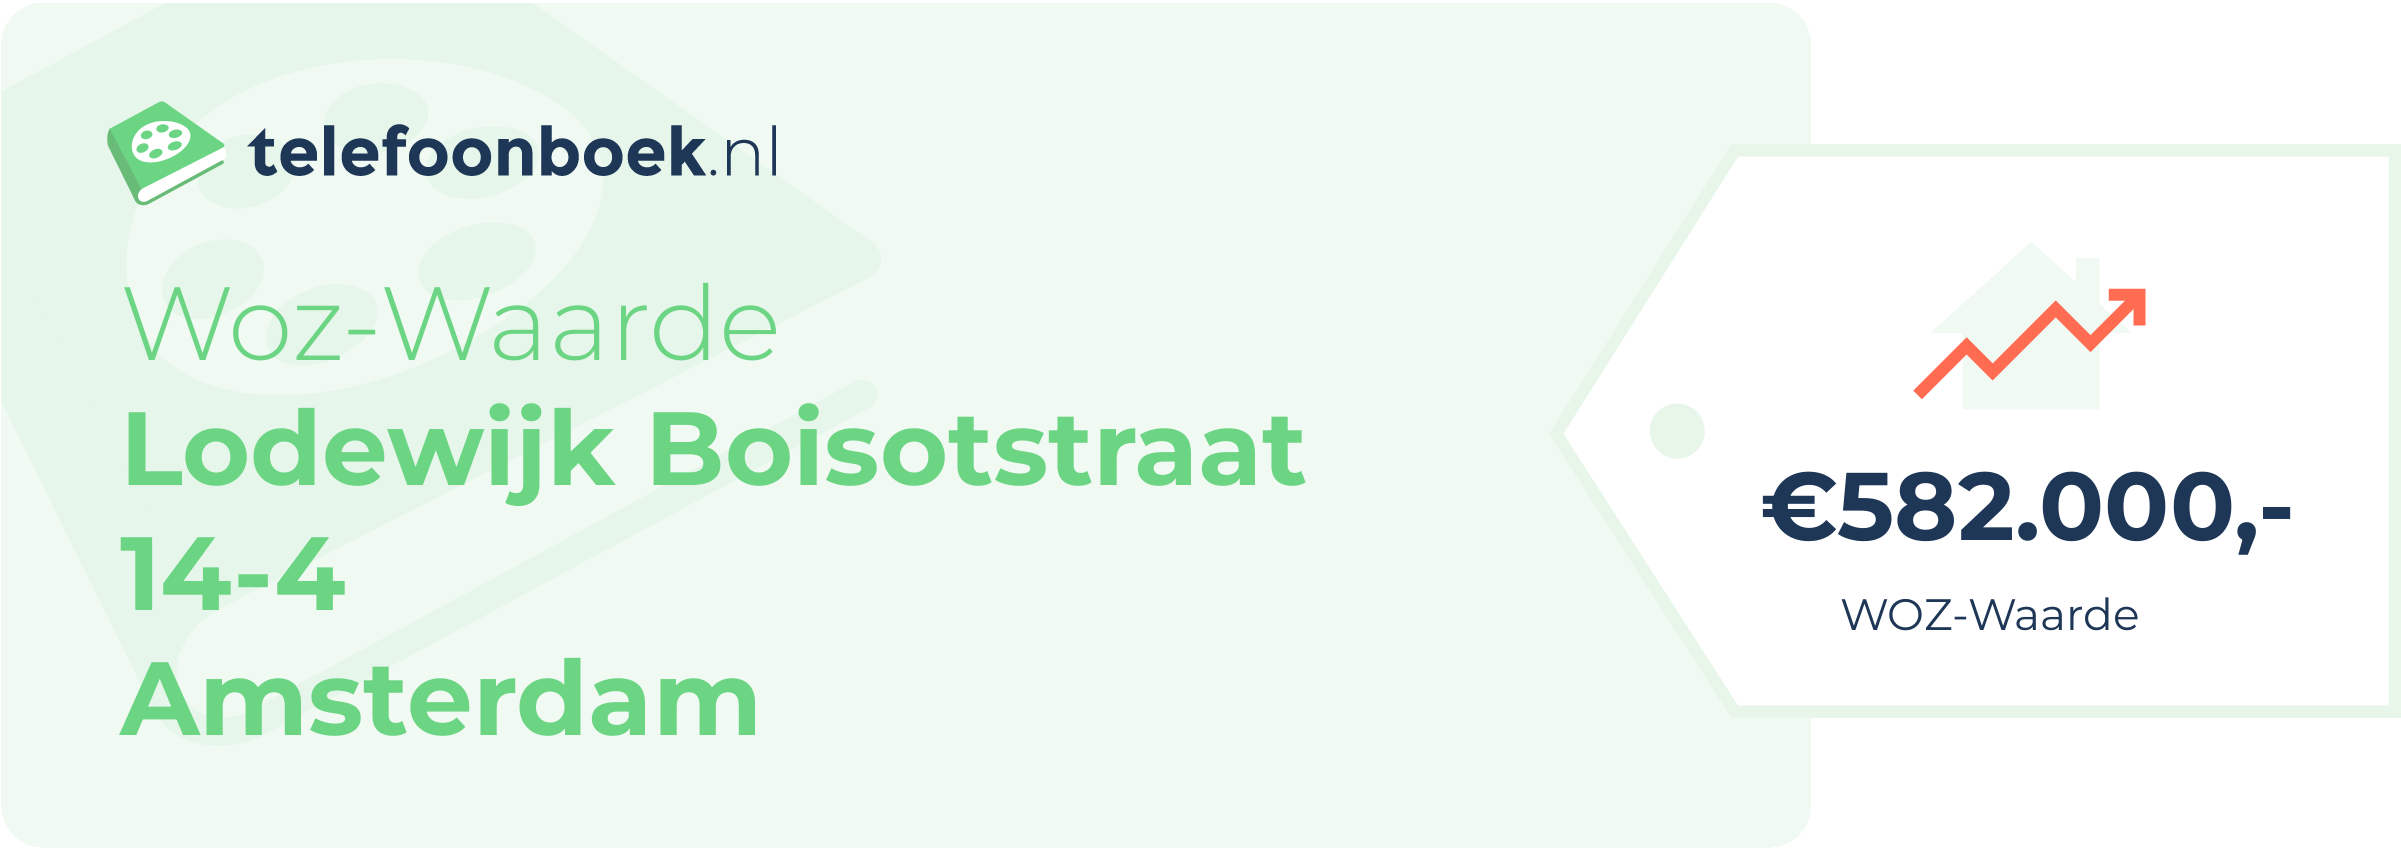 WOZ-waarde Lodewijk Boisotstraat 14-4 Amsterdam